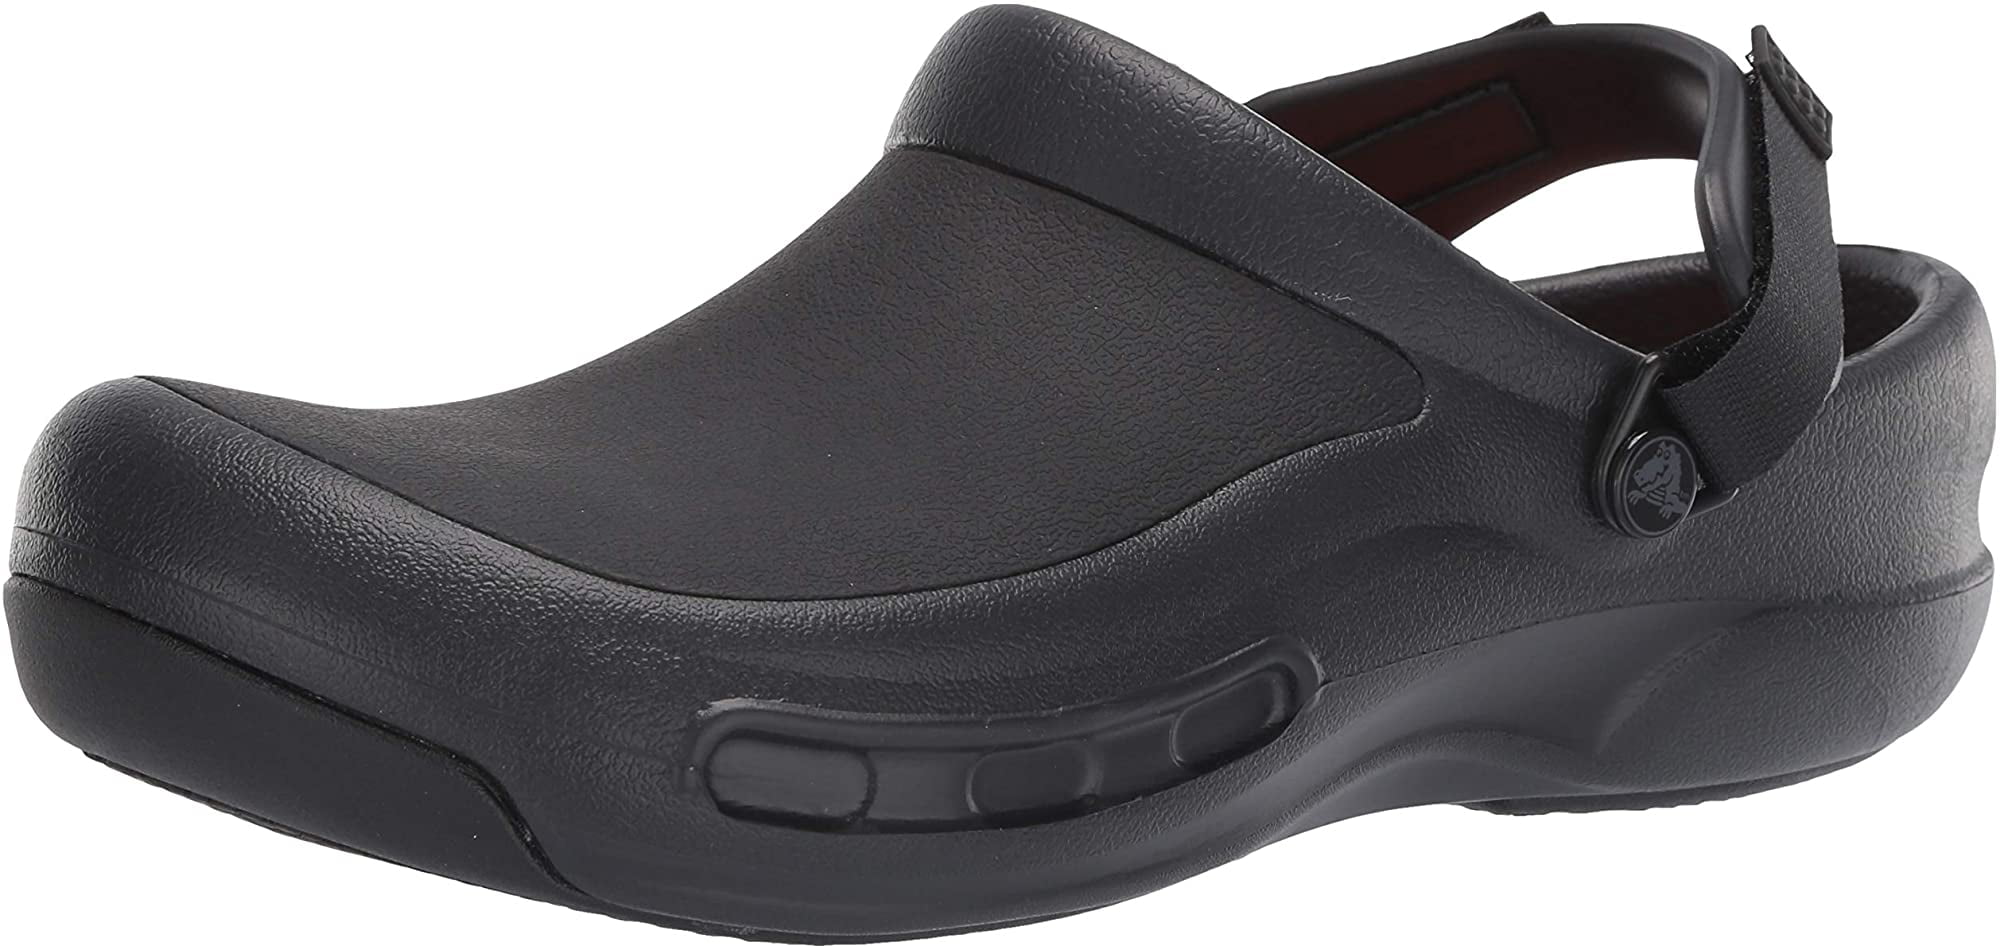 Crocs Unisex-Adult Bistro Pro Literide Clog Comfortable Work Shoes ...